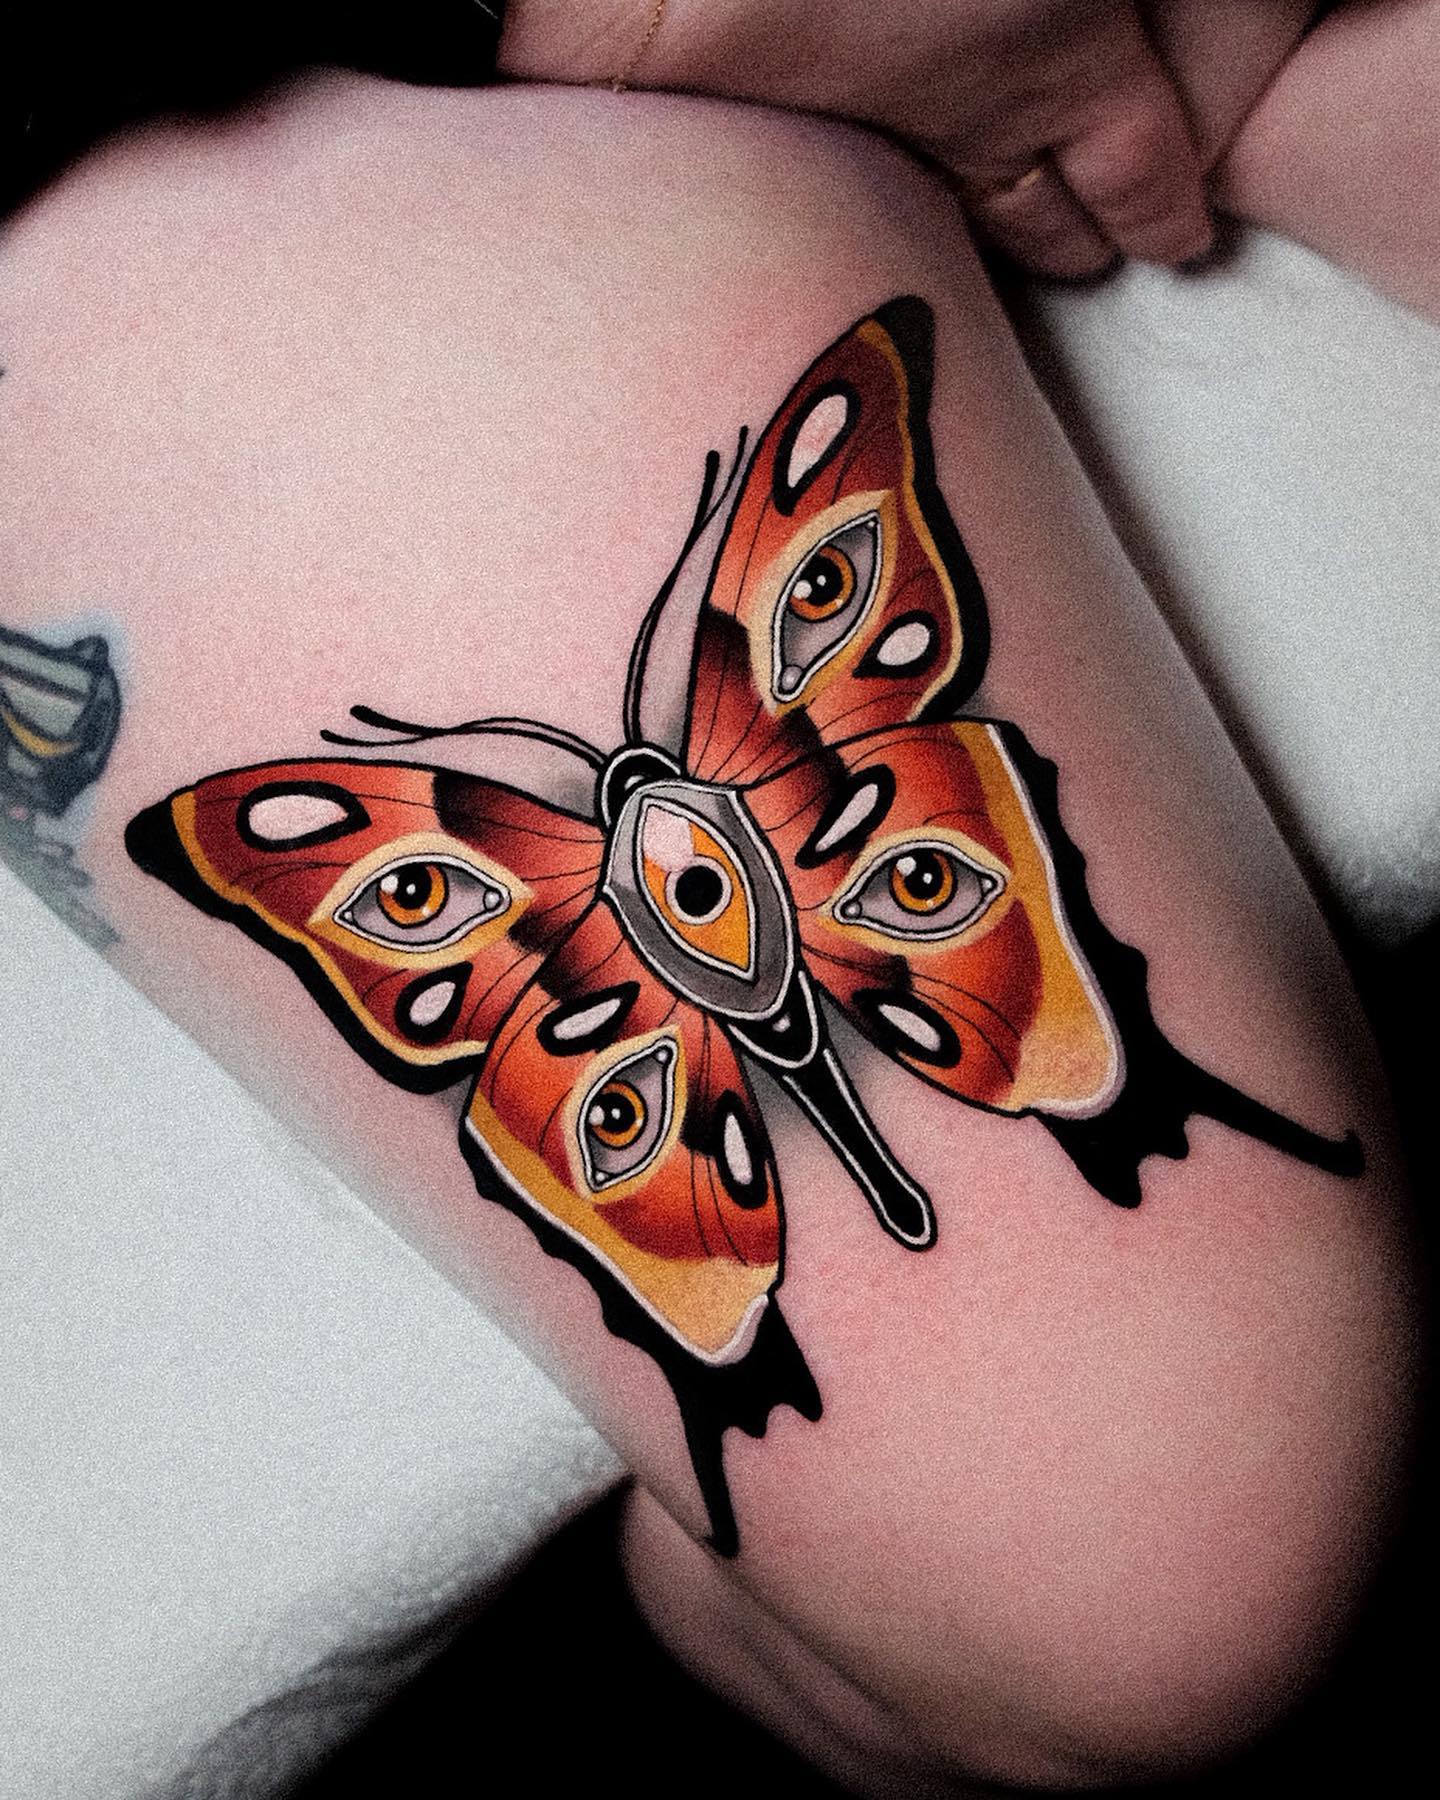 Mariposa Inspirada Tatuaje del Ojo que Todo lo Ve